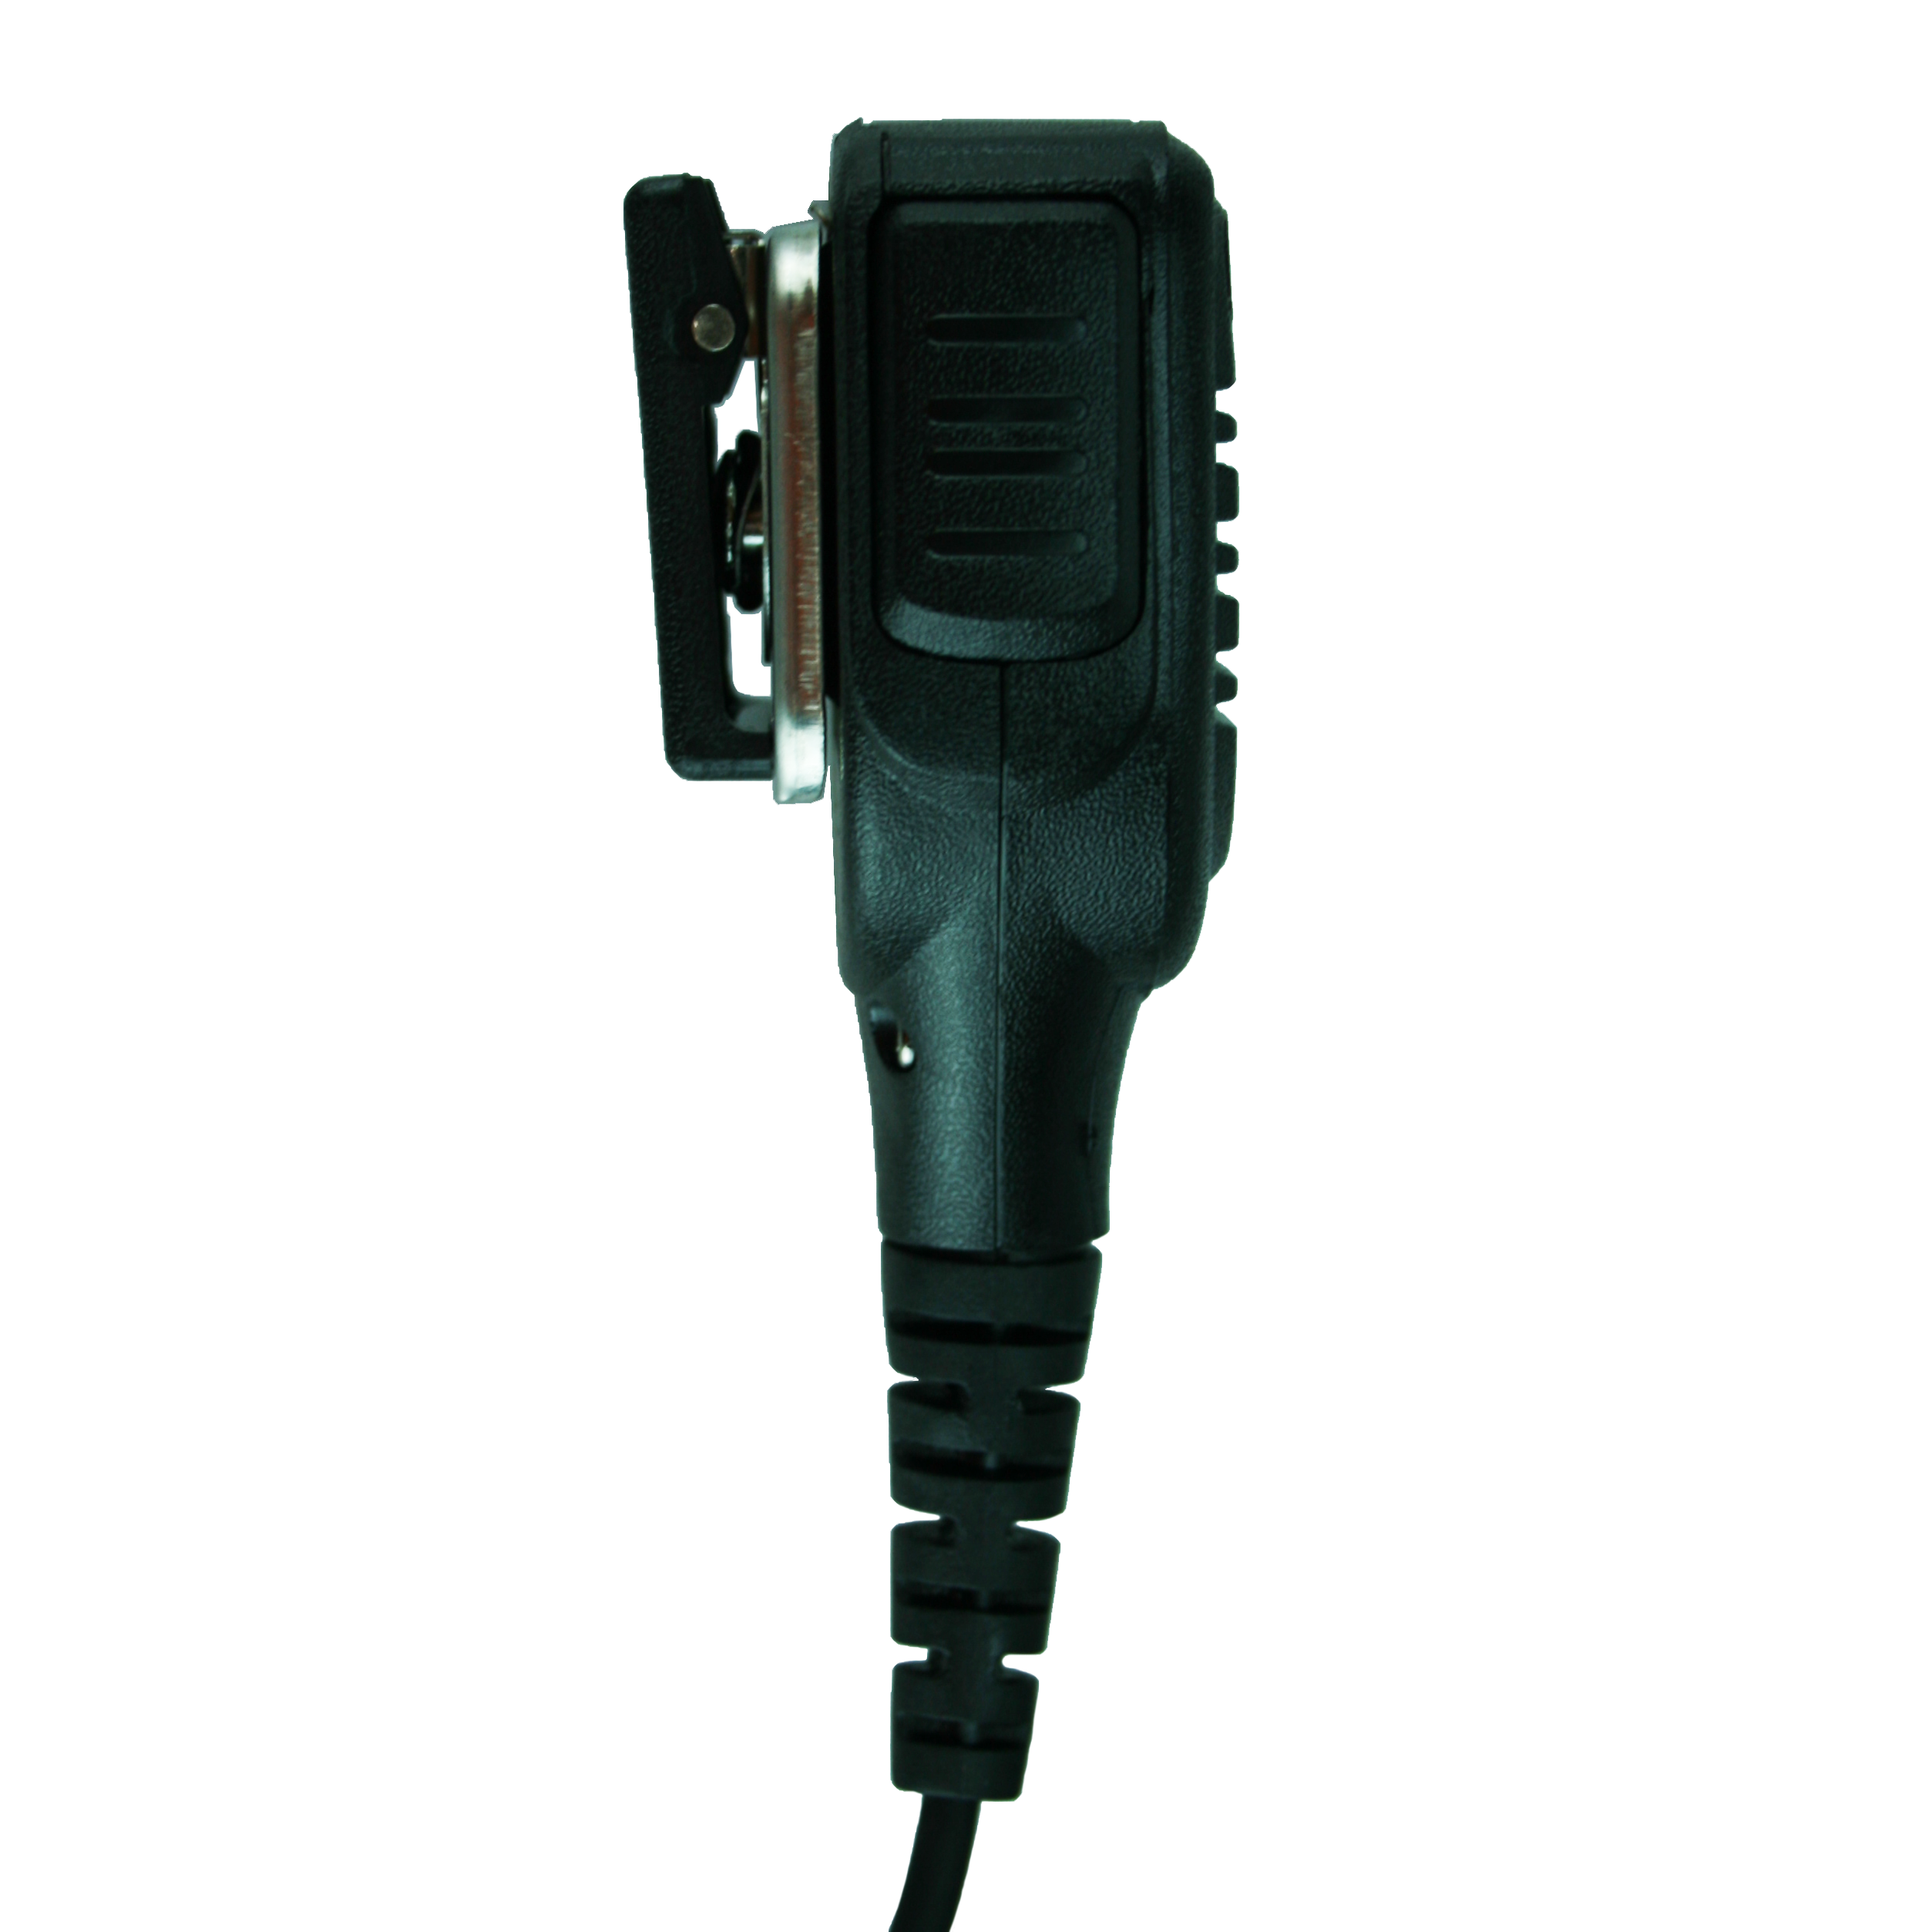 Banshee Replacement For PMMN4025 PMMN4025A PMMN4025AL IMPRES Remote Speaker Microphone w/ 3.5mm Audio Jack for MotoTurbo XPR6300, XPR6350, XPR6380, XPR6500, XPR6550, XPR6580